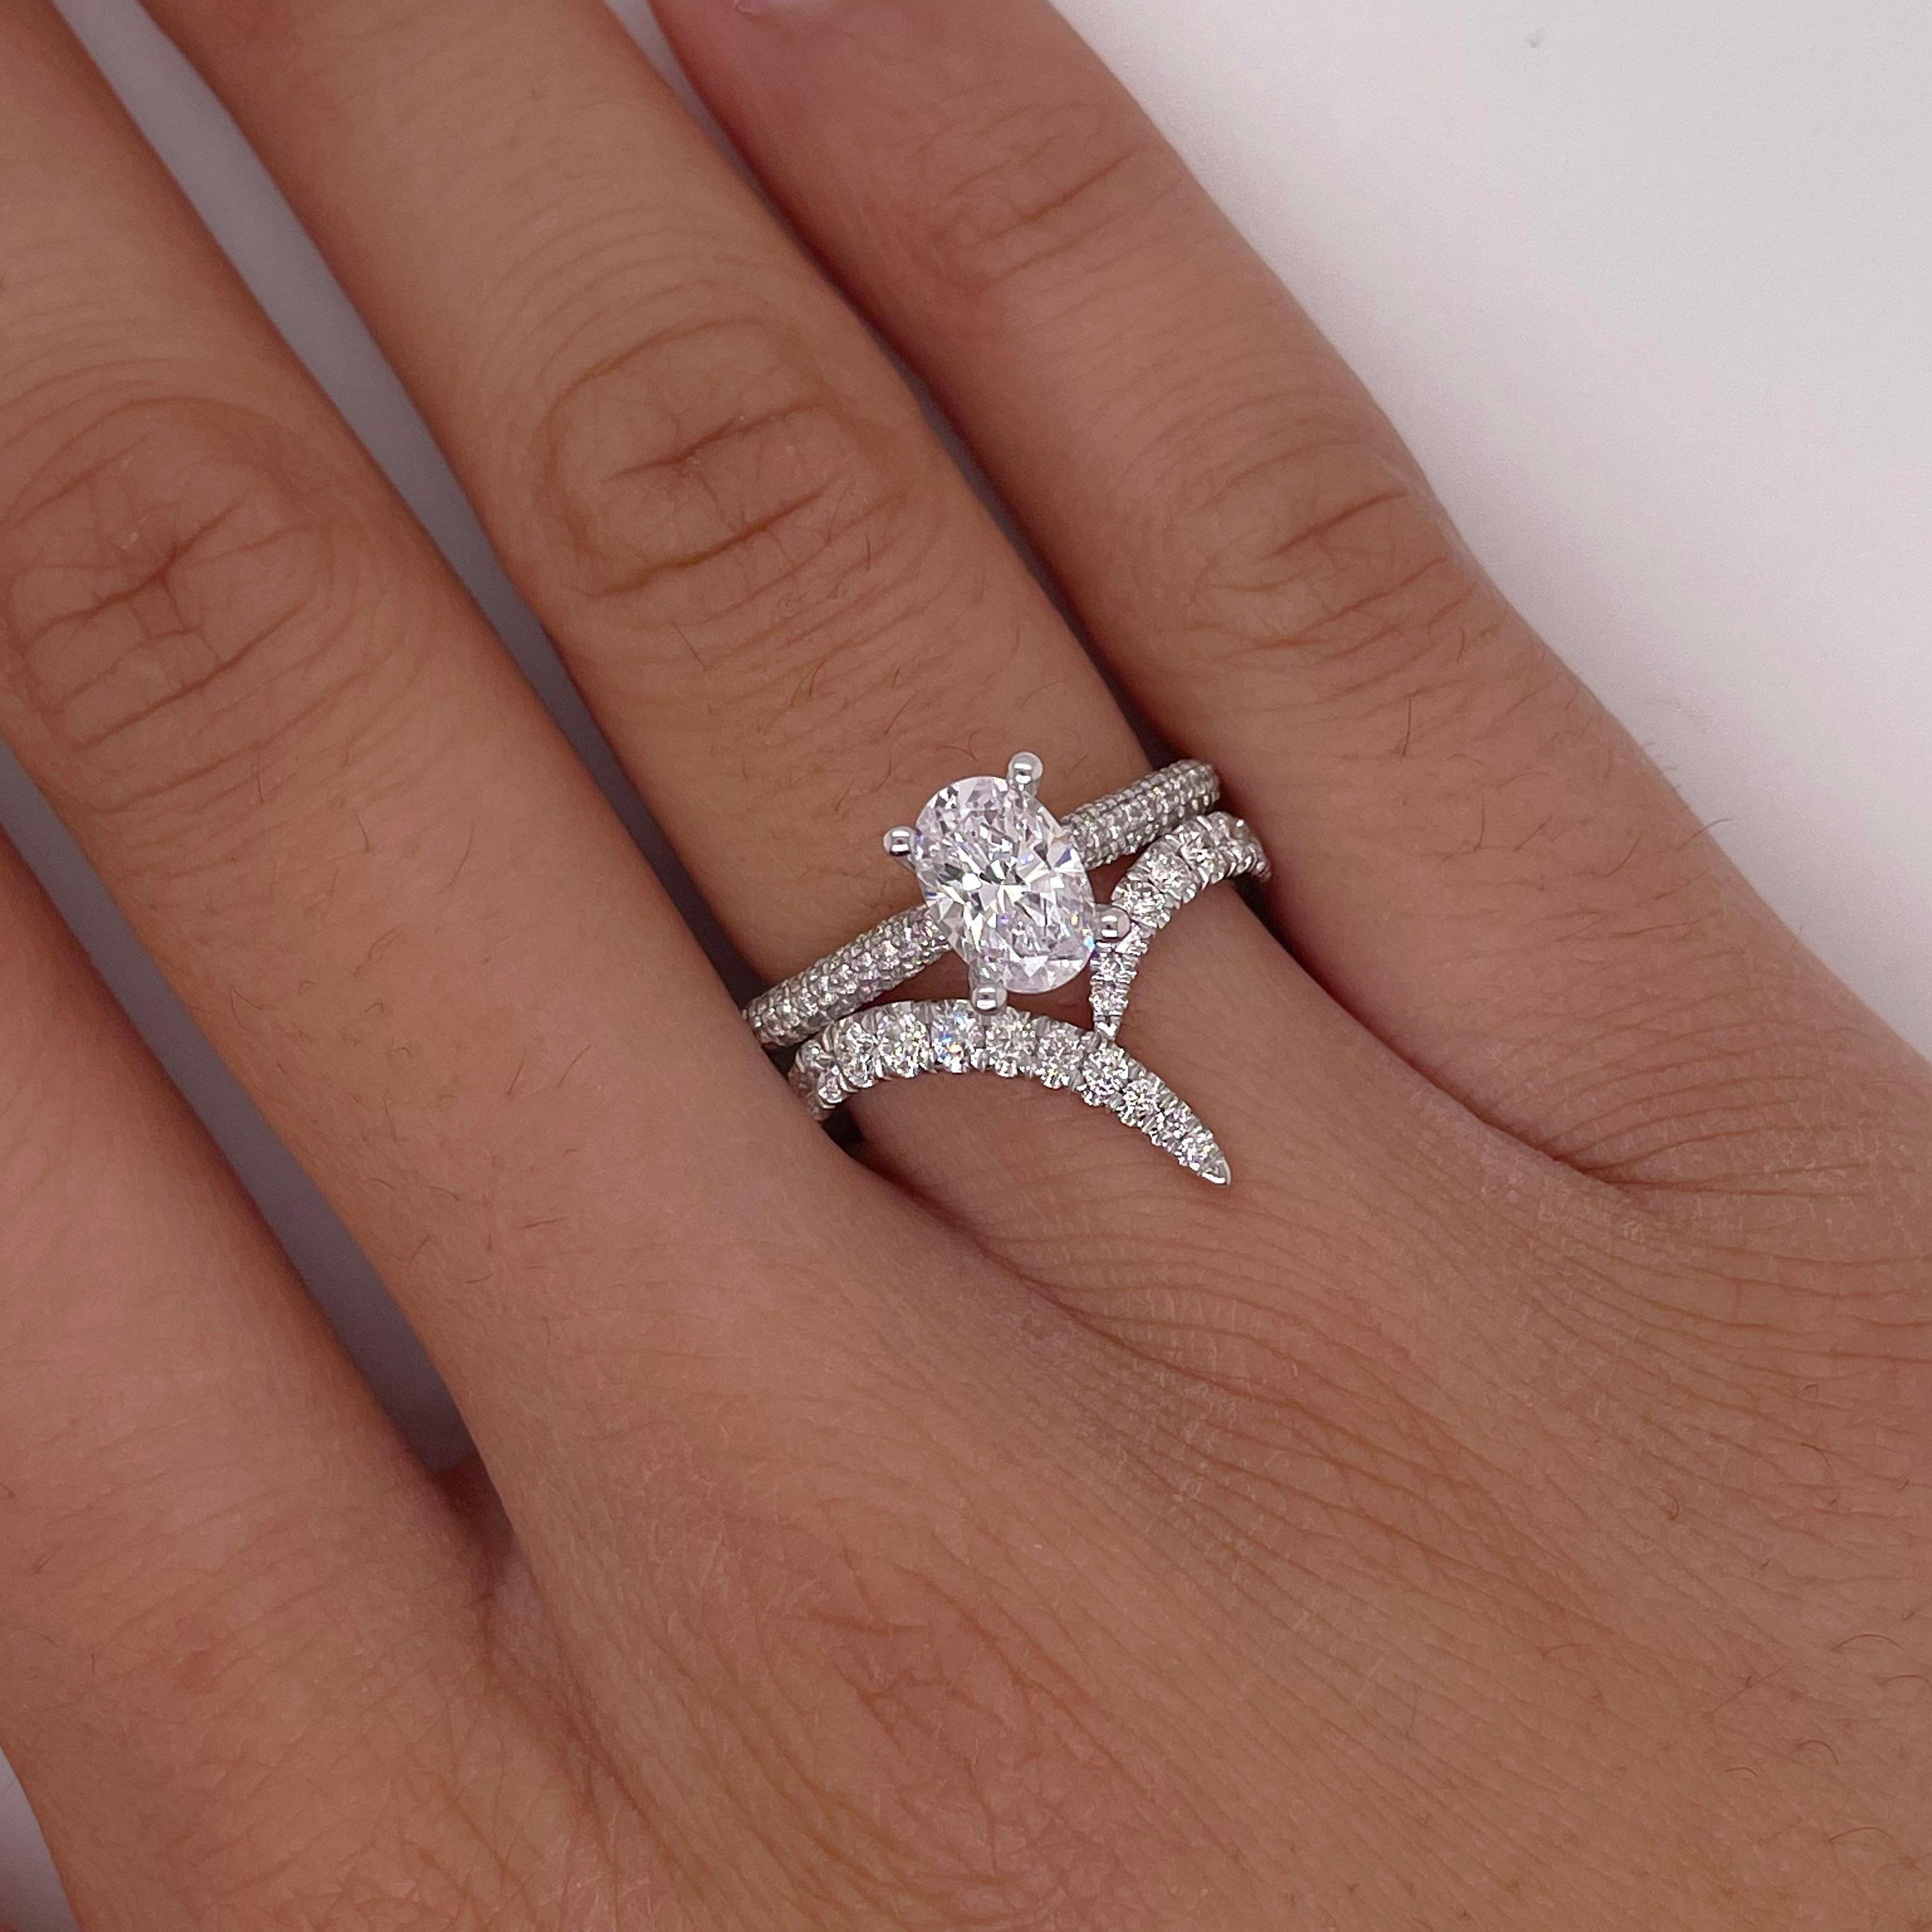 For Sale:  V Diamond Band Ring 14K White Gold, 20 Diamonds in Iconic Design, Wedding Band 5